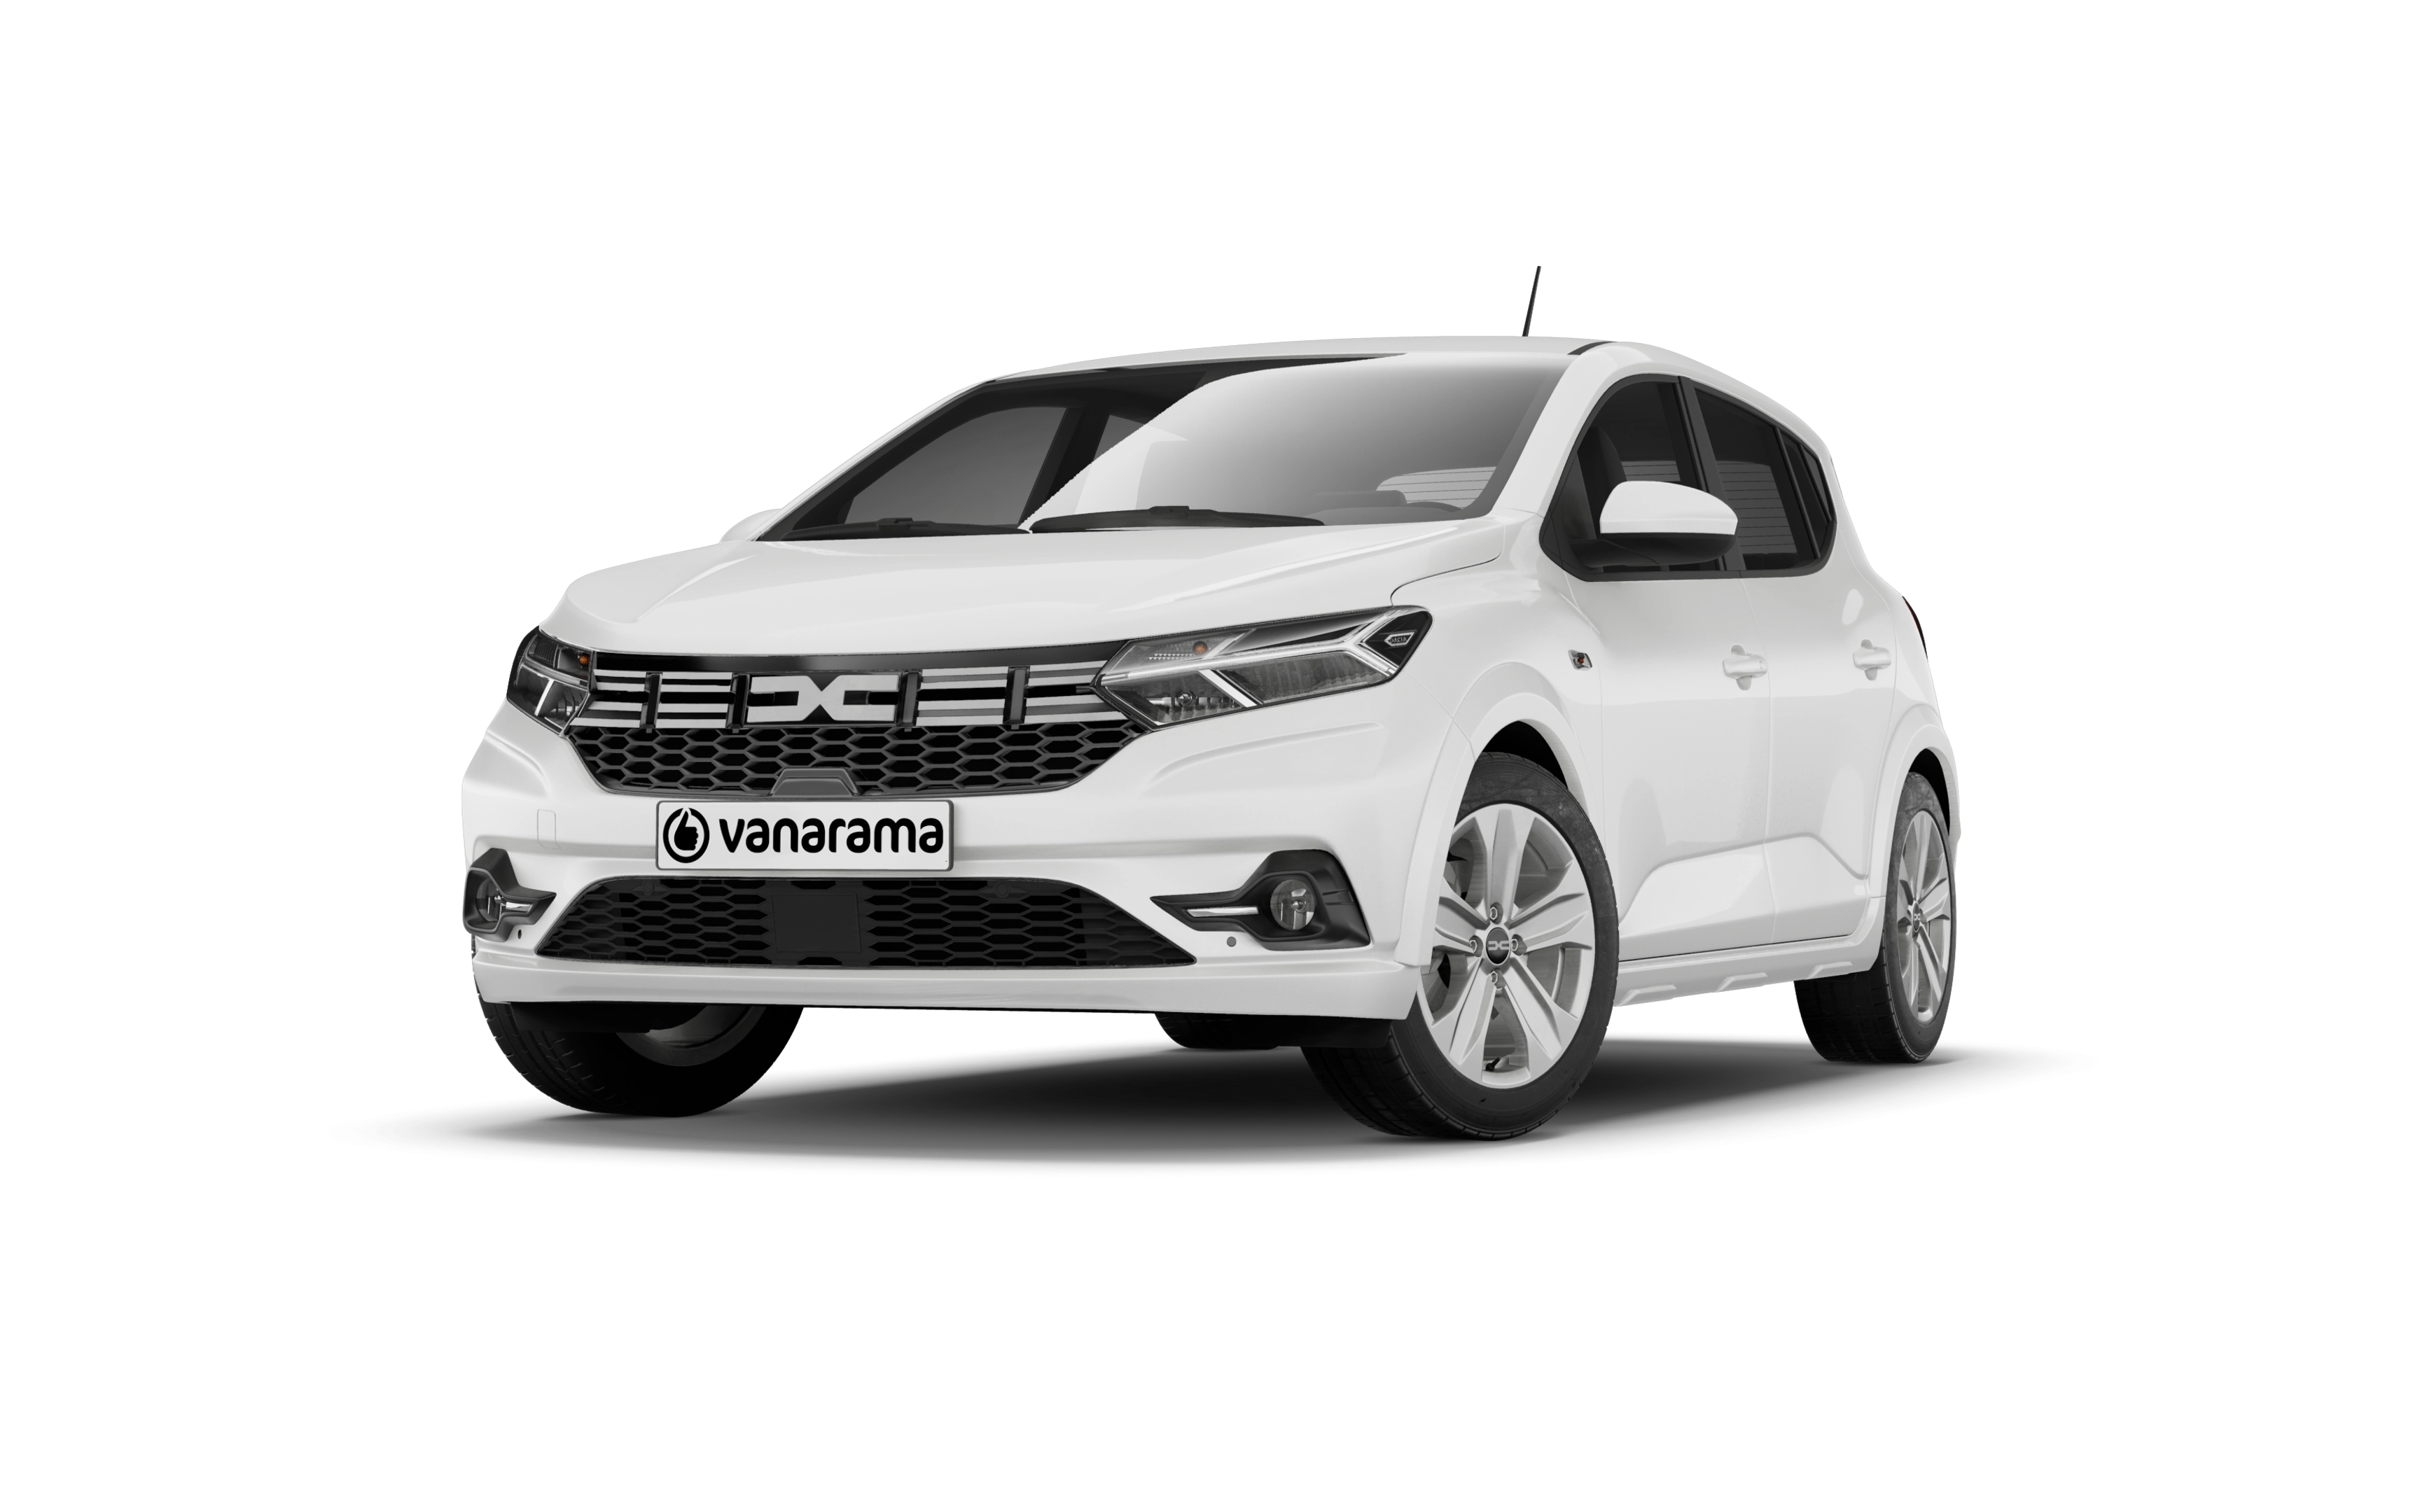 Dacia sandero hatchback 1.0 tce bi-fuel expression 5 doors